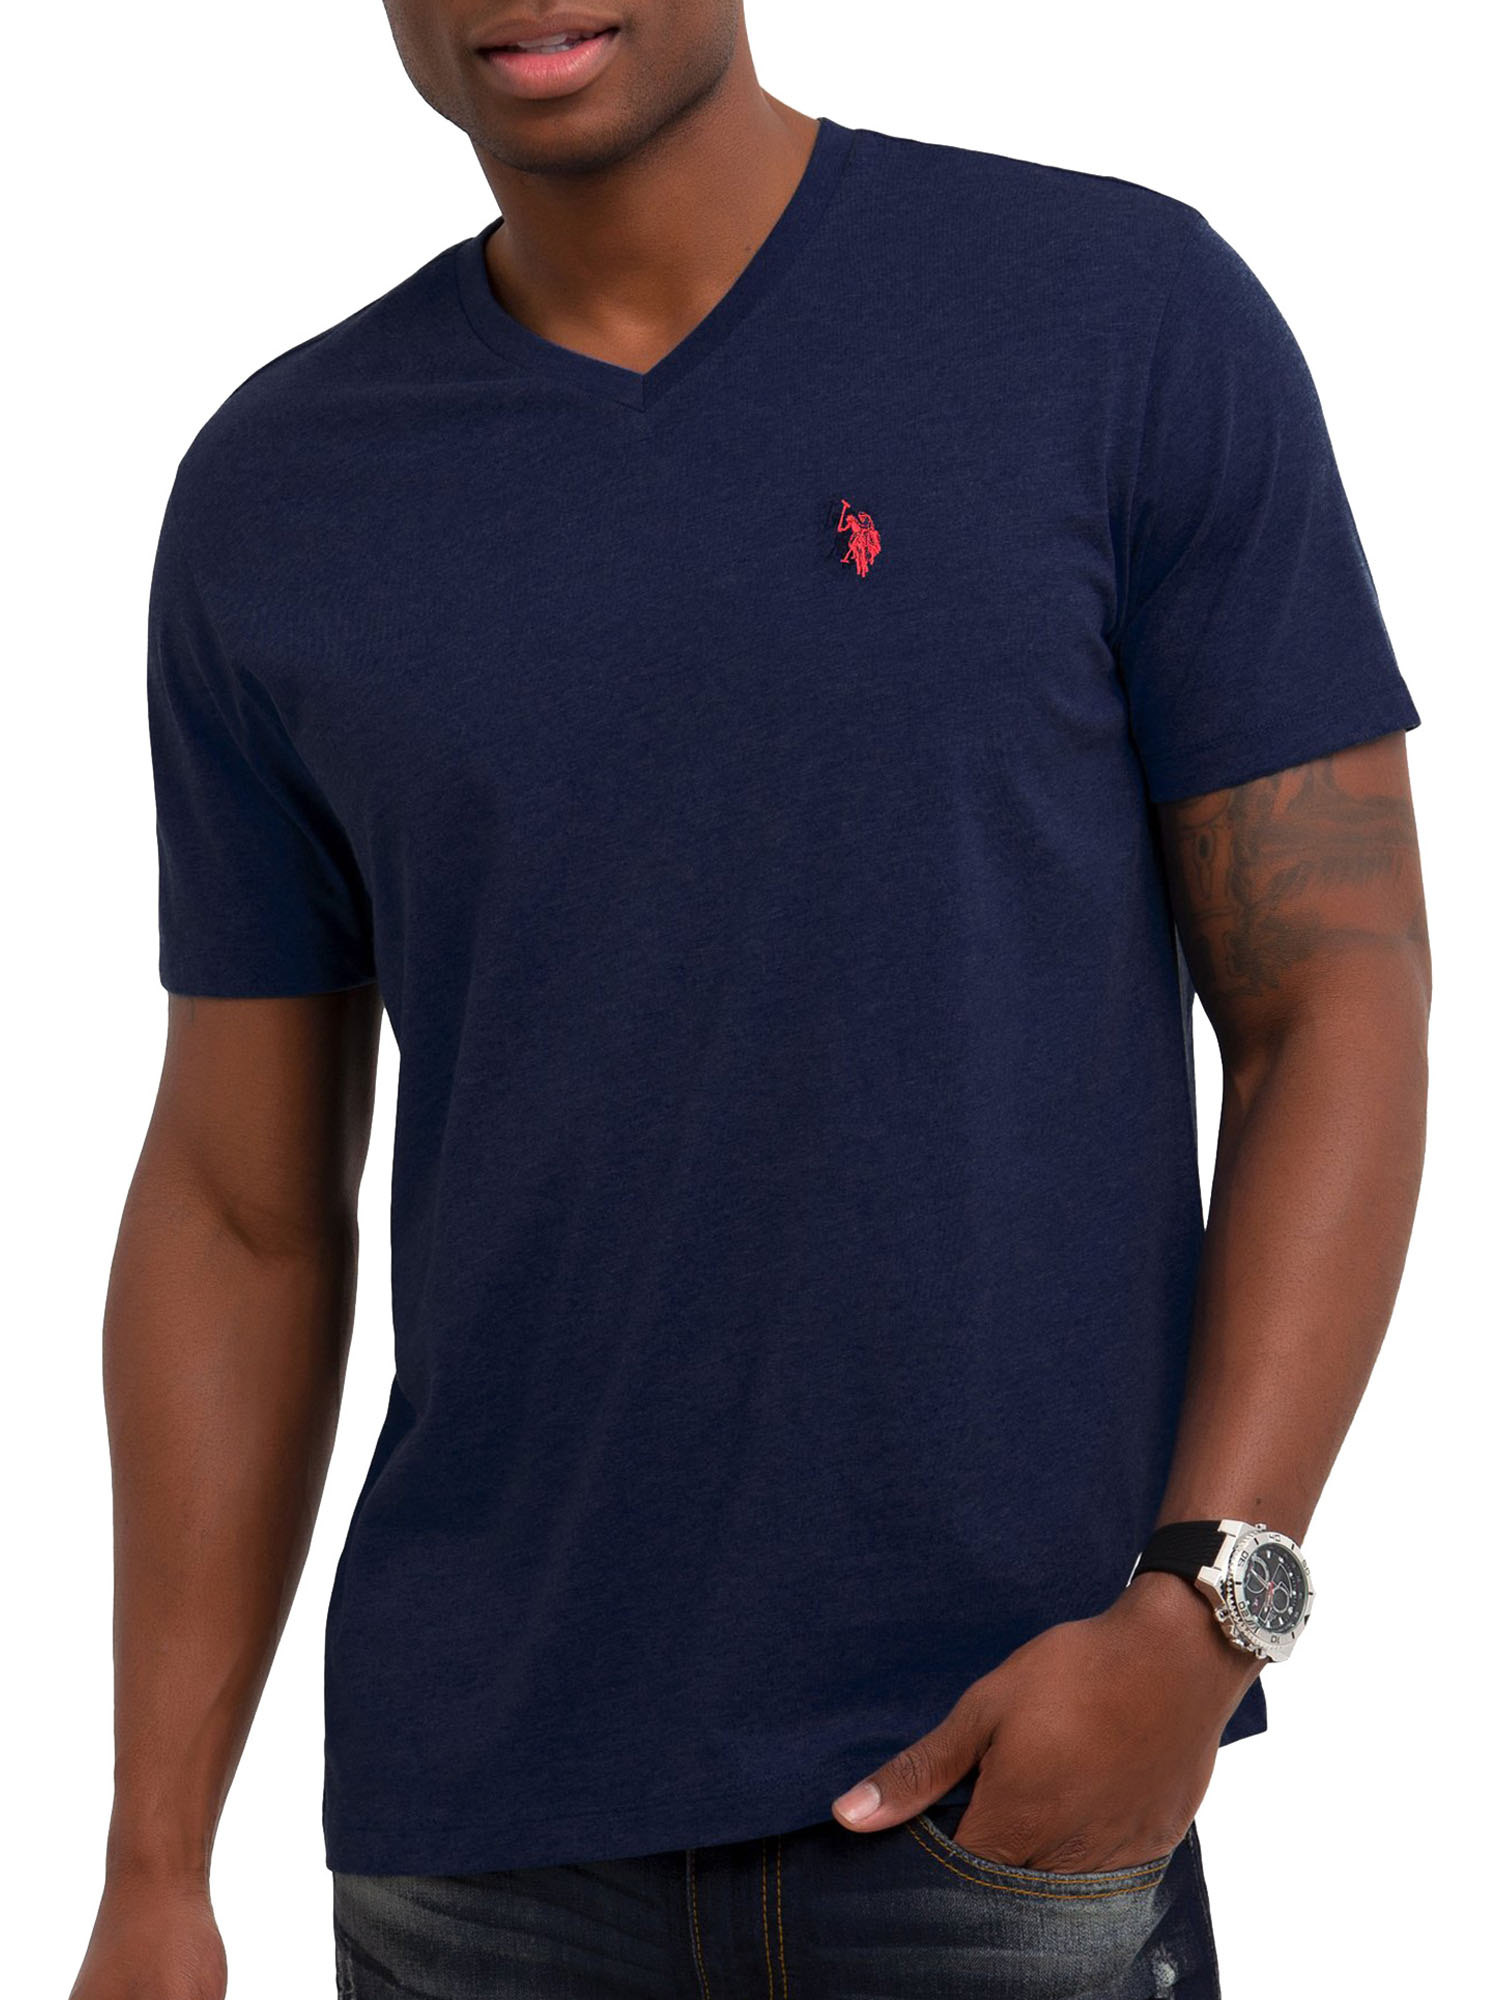 U.S. Polo Assn. Men's V-Neck T-Shirt - image 1 of 5